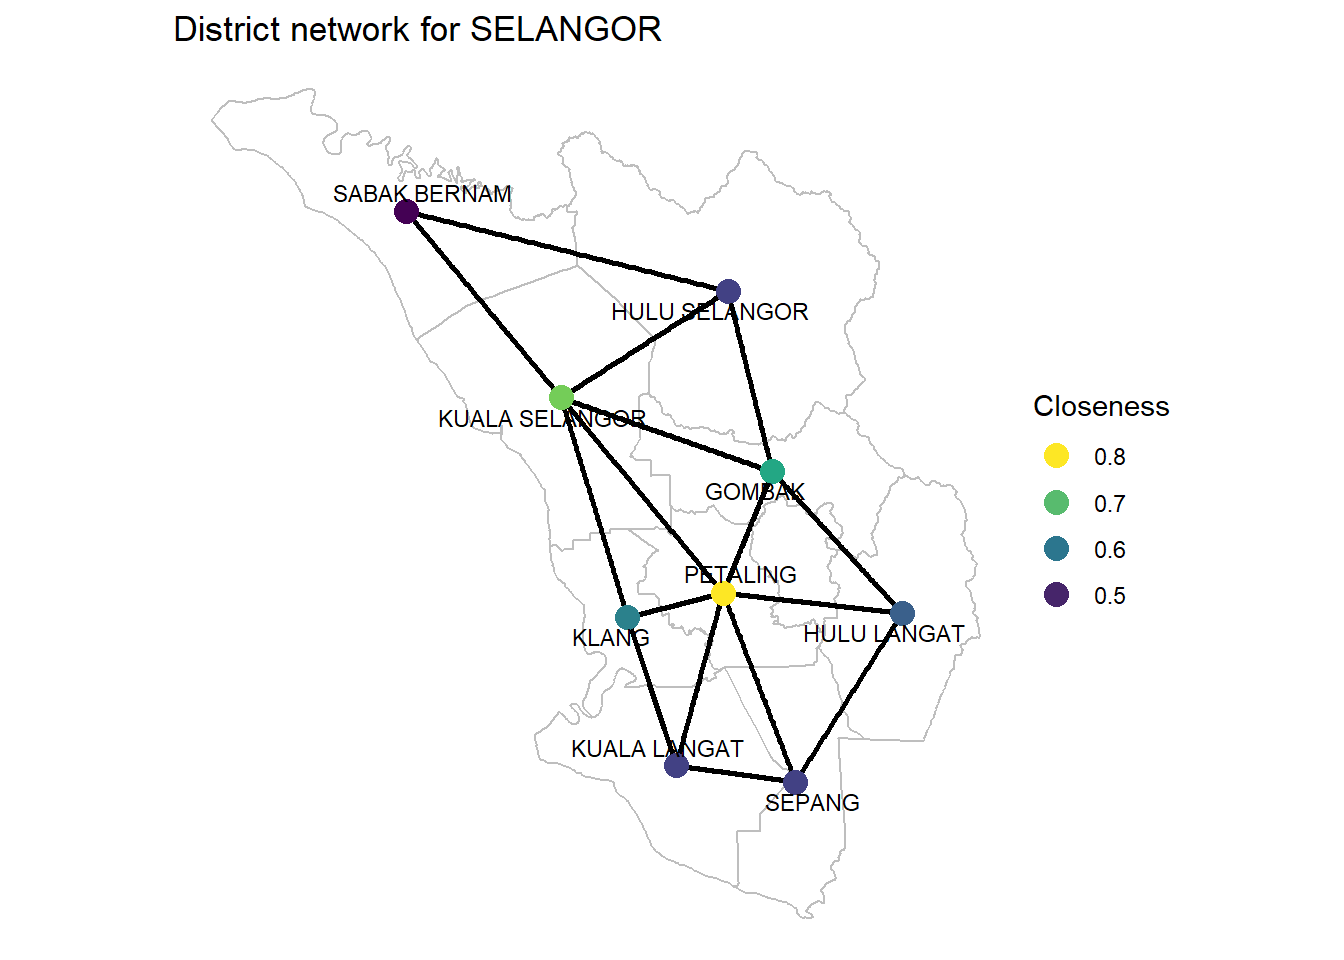 Closeness of SELANGOR district network